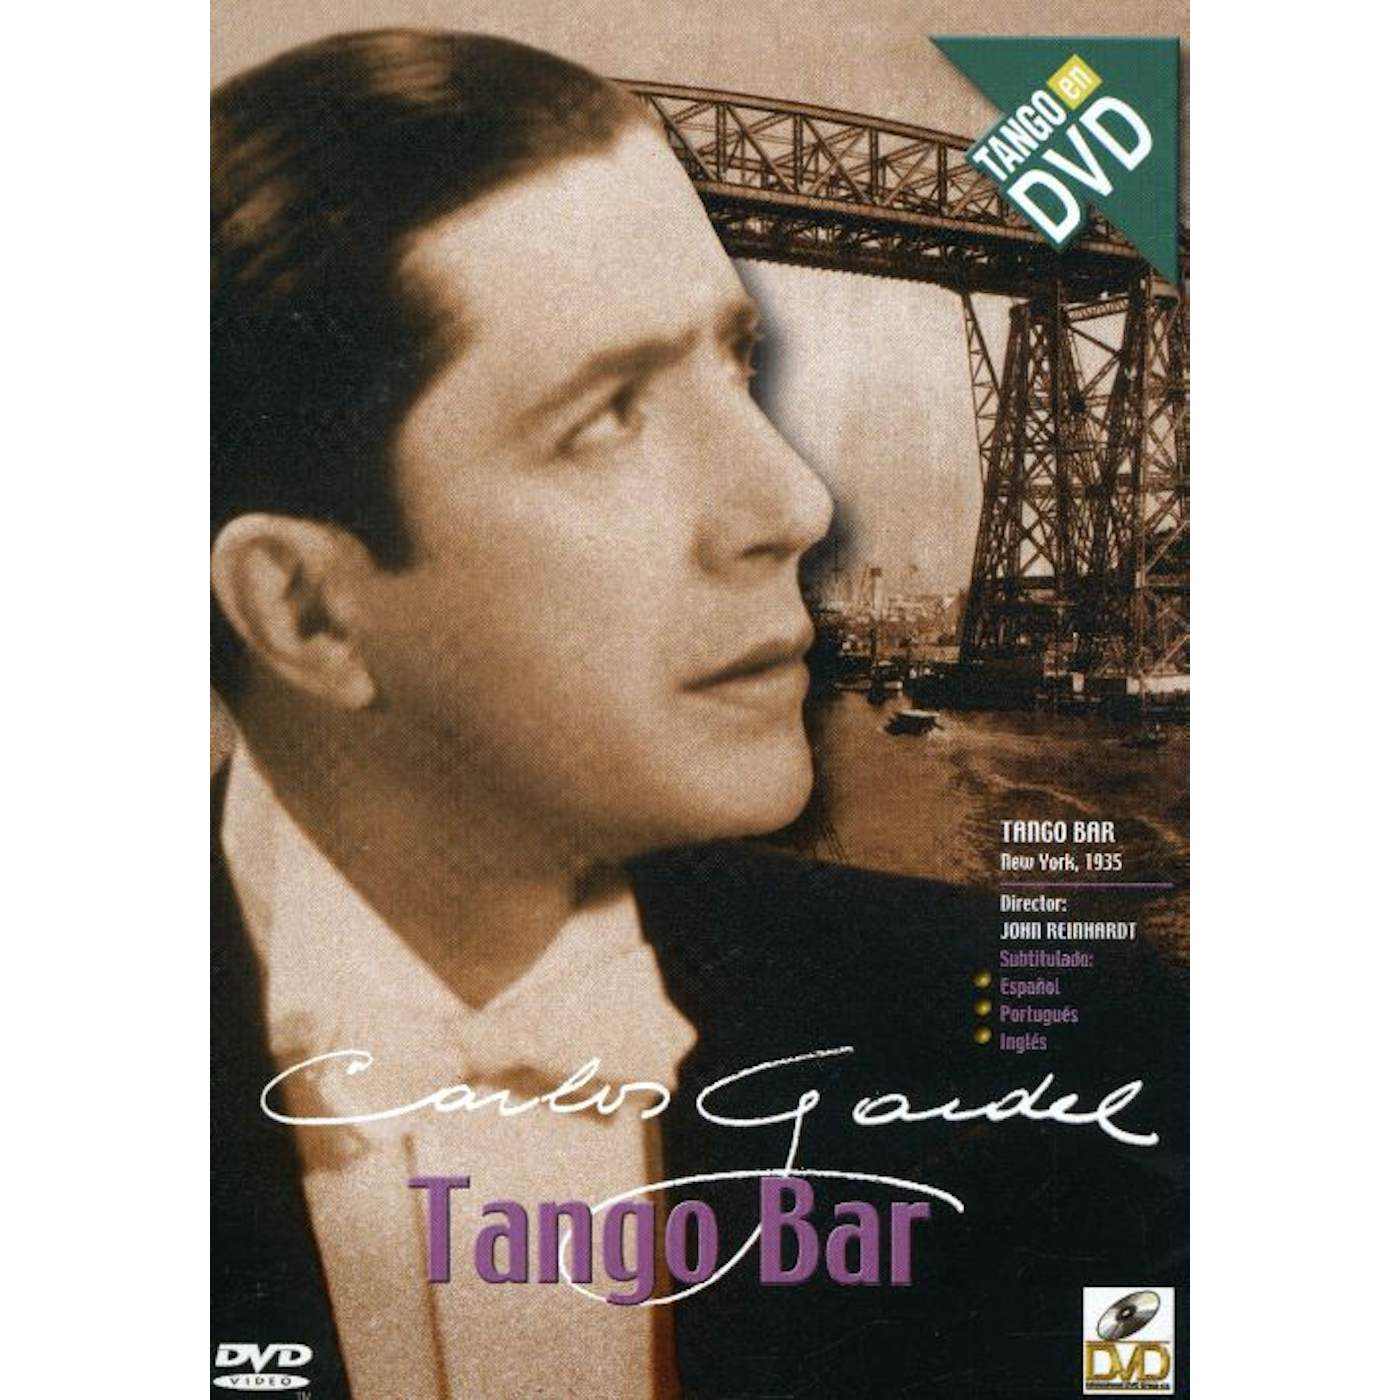 Carlos Gardel TANGO BAR DVD